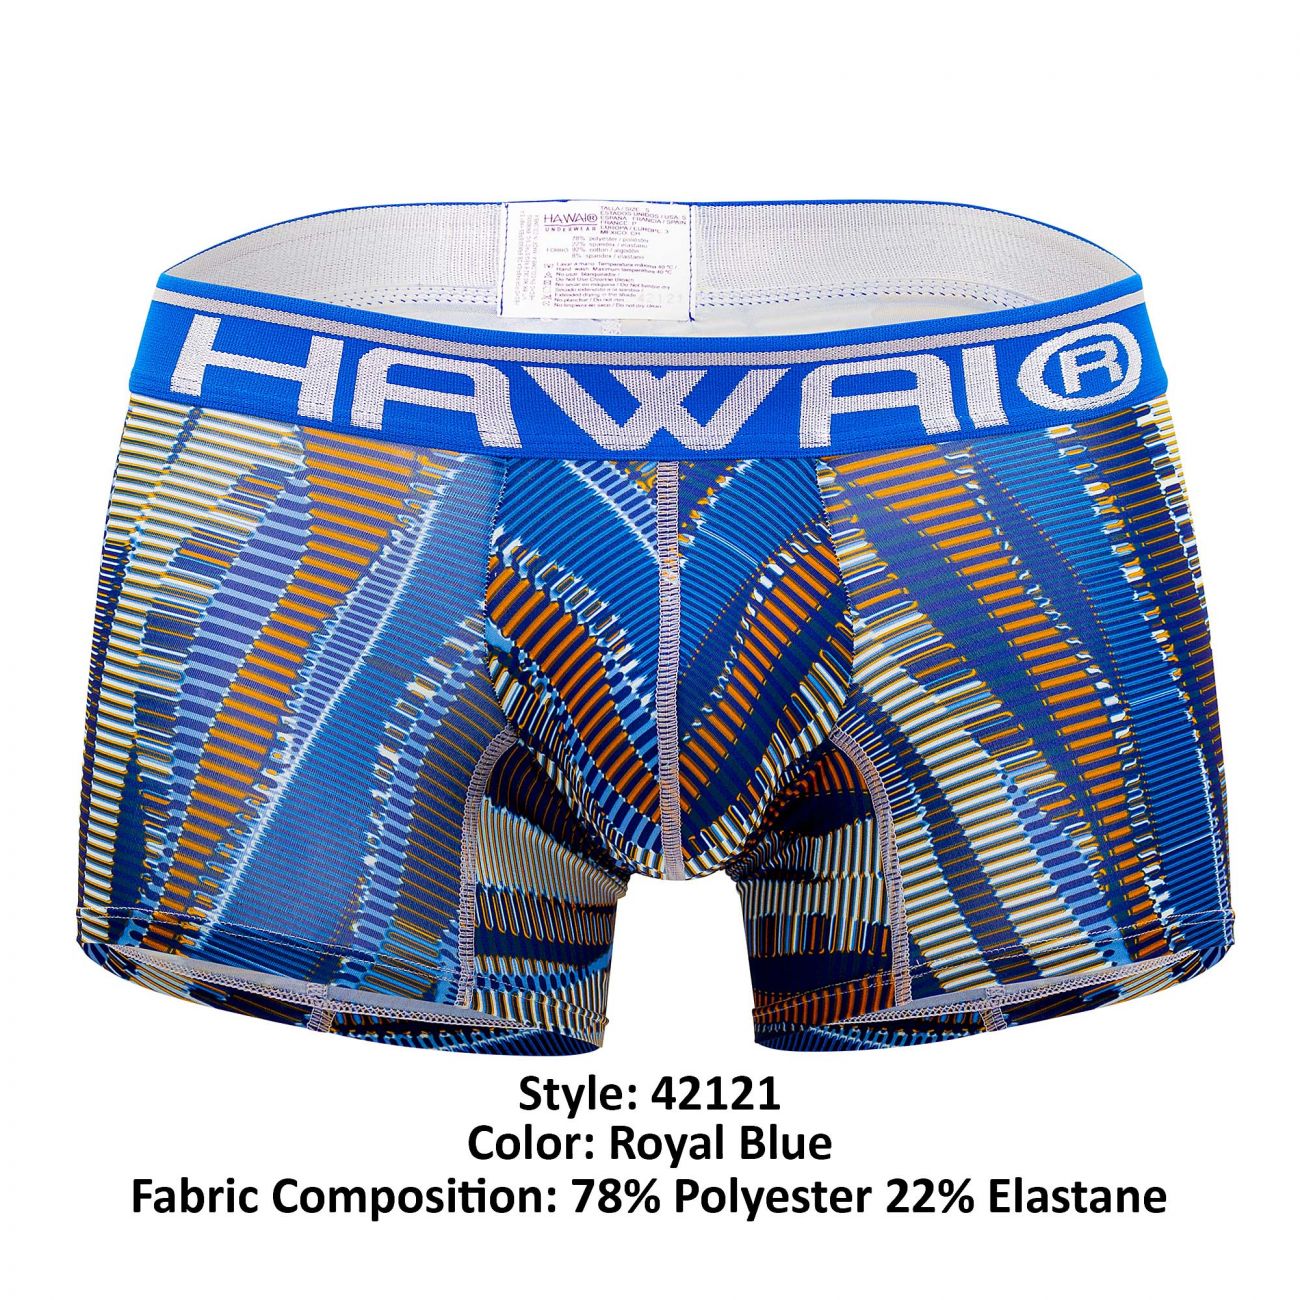 HAWAI 42121 Printed Athletic Trunks Royal Blue